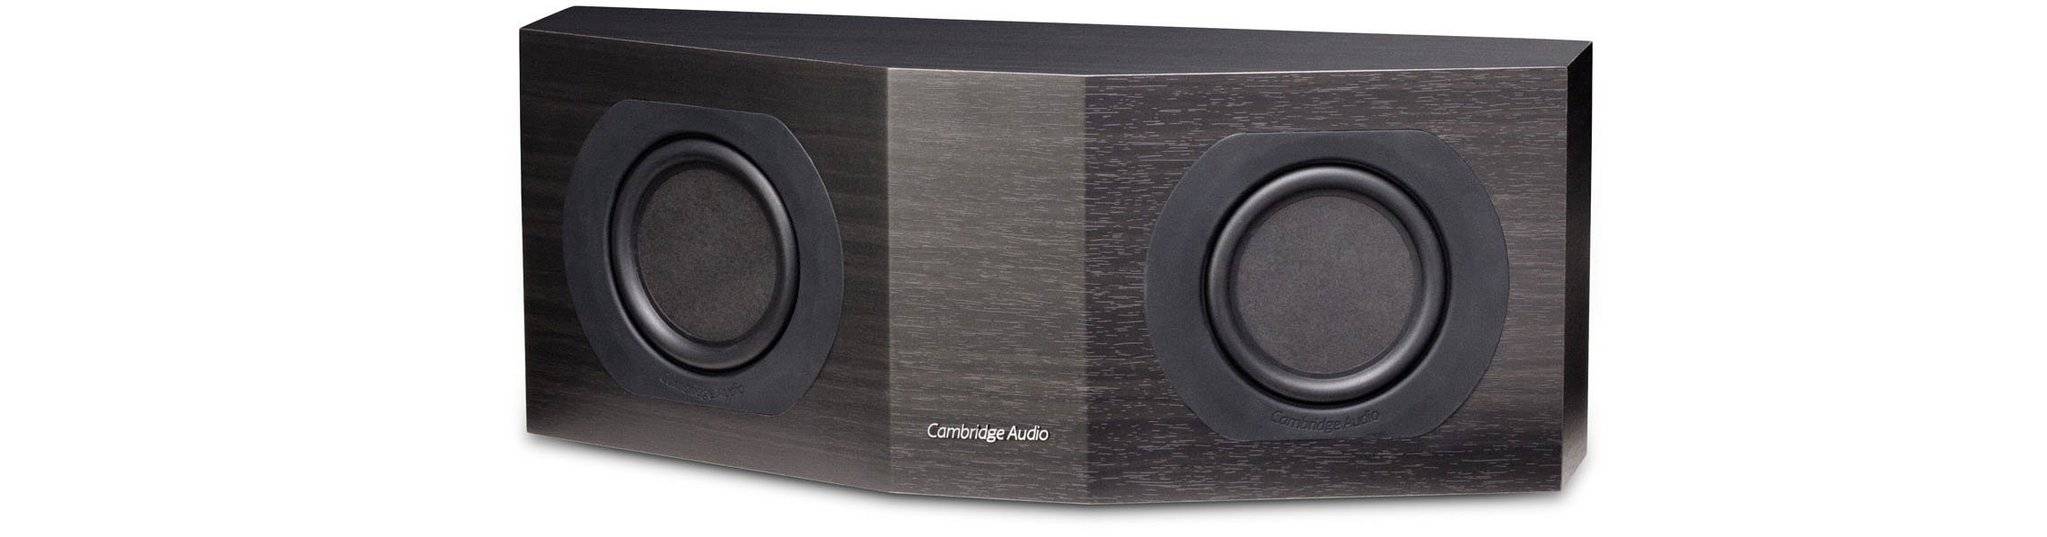 Cambridge Audio Aero 3